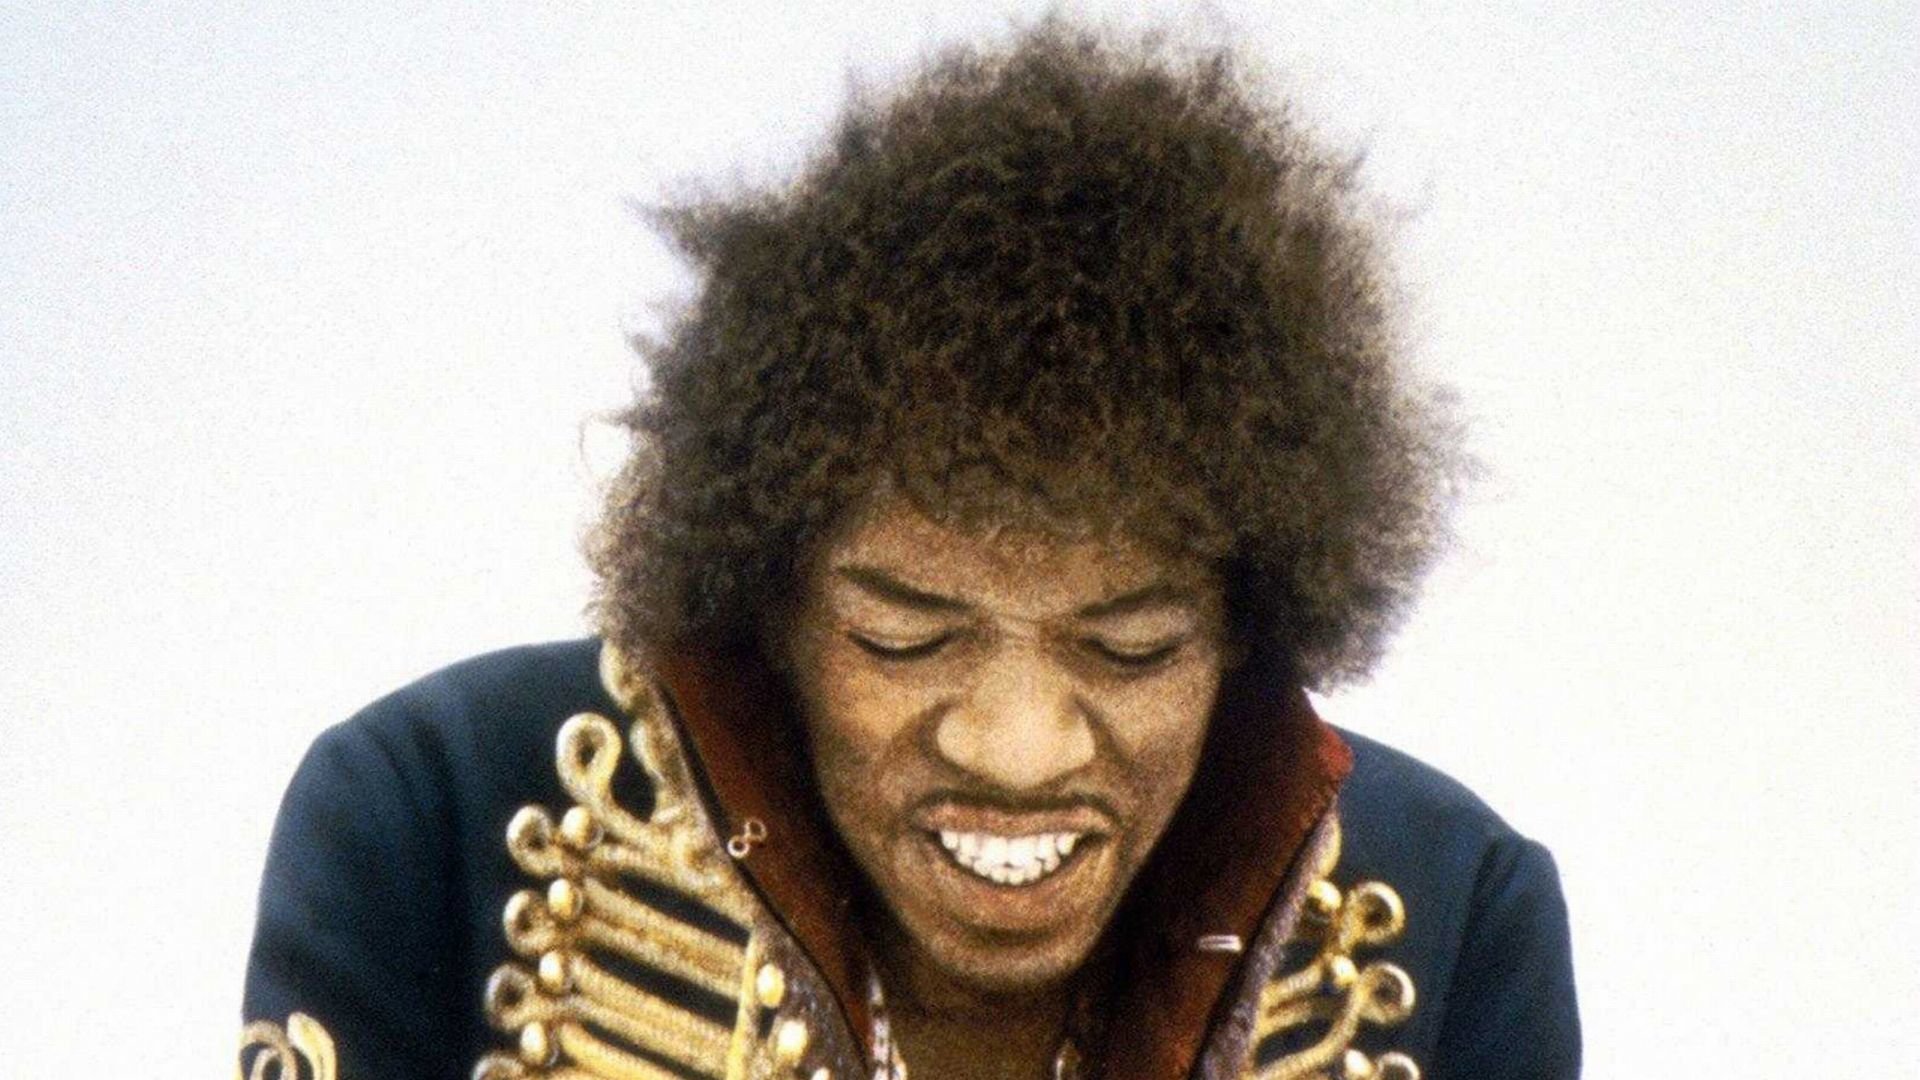 Free download Jimi Hendrix wallpaper ID:293233 1080p for desktop